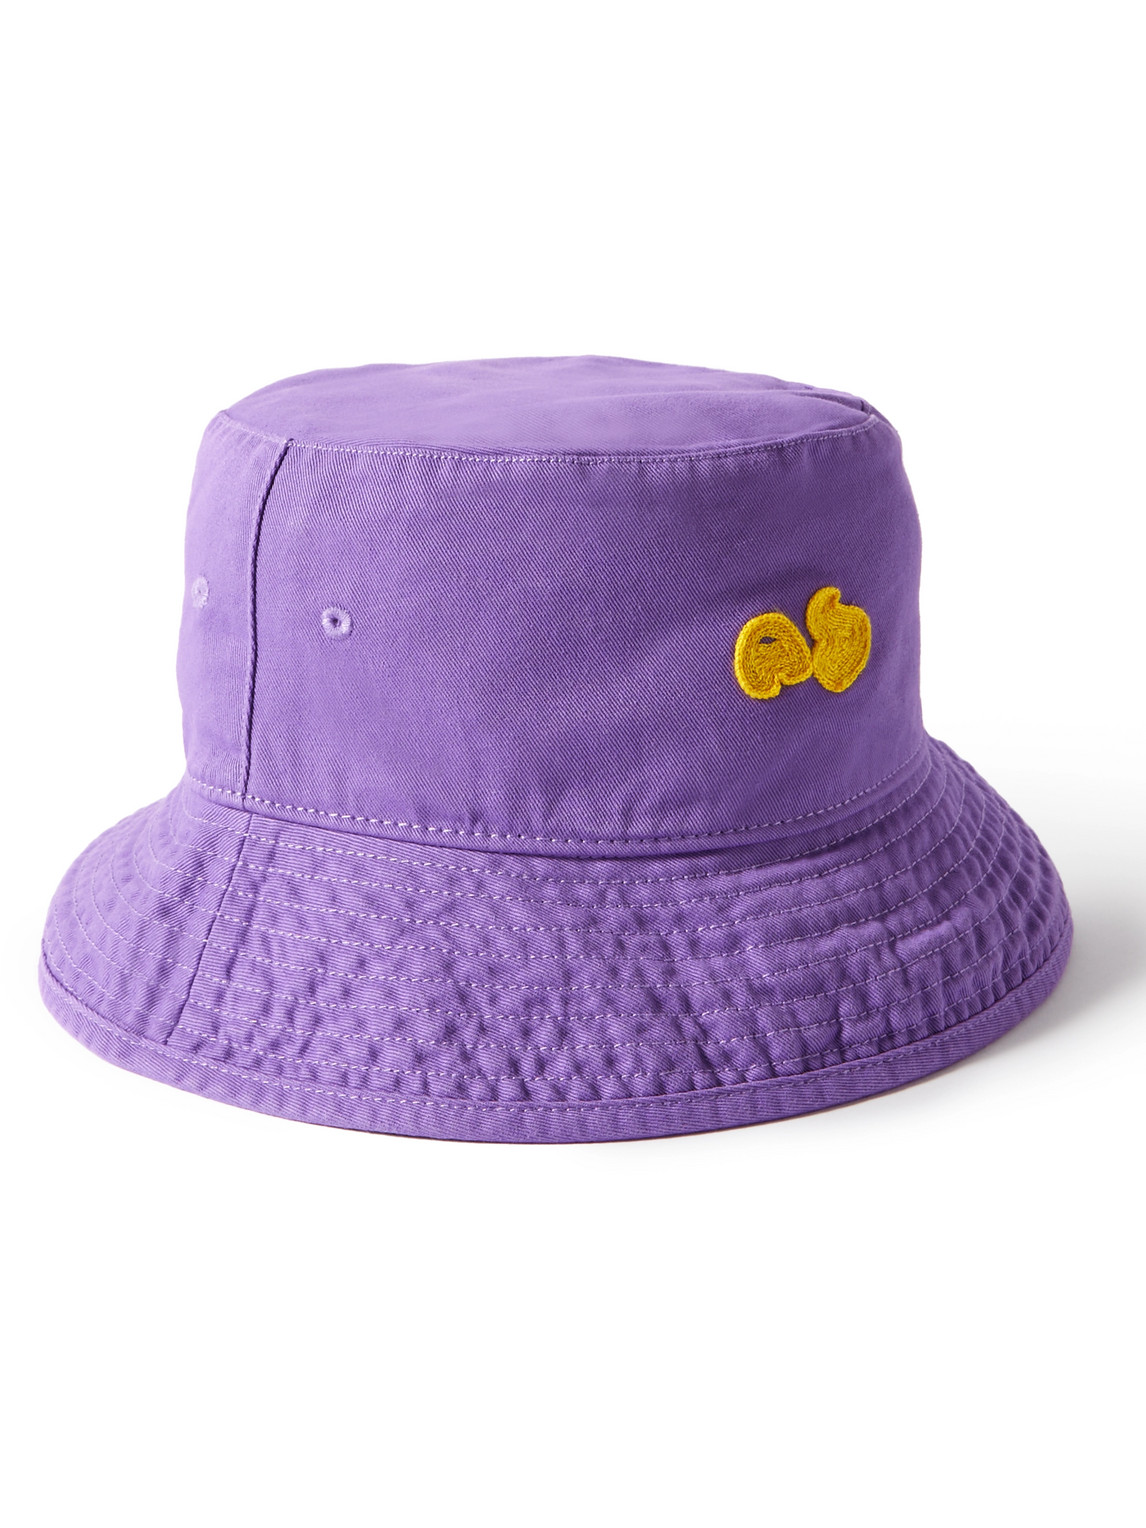 Acne Studios - Logo-Appliquéd Garment-Dyed Cotton-Twill Bucket Hat - Men - Purple - S/M